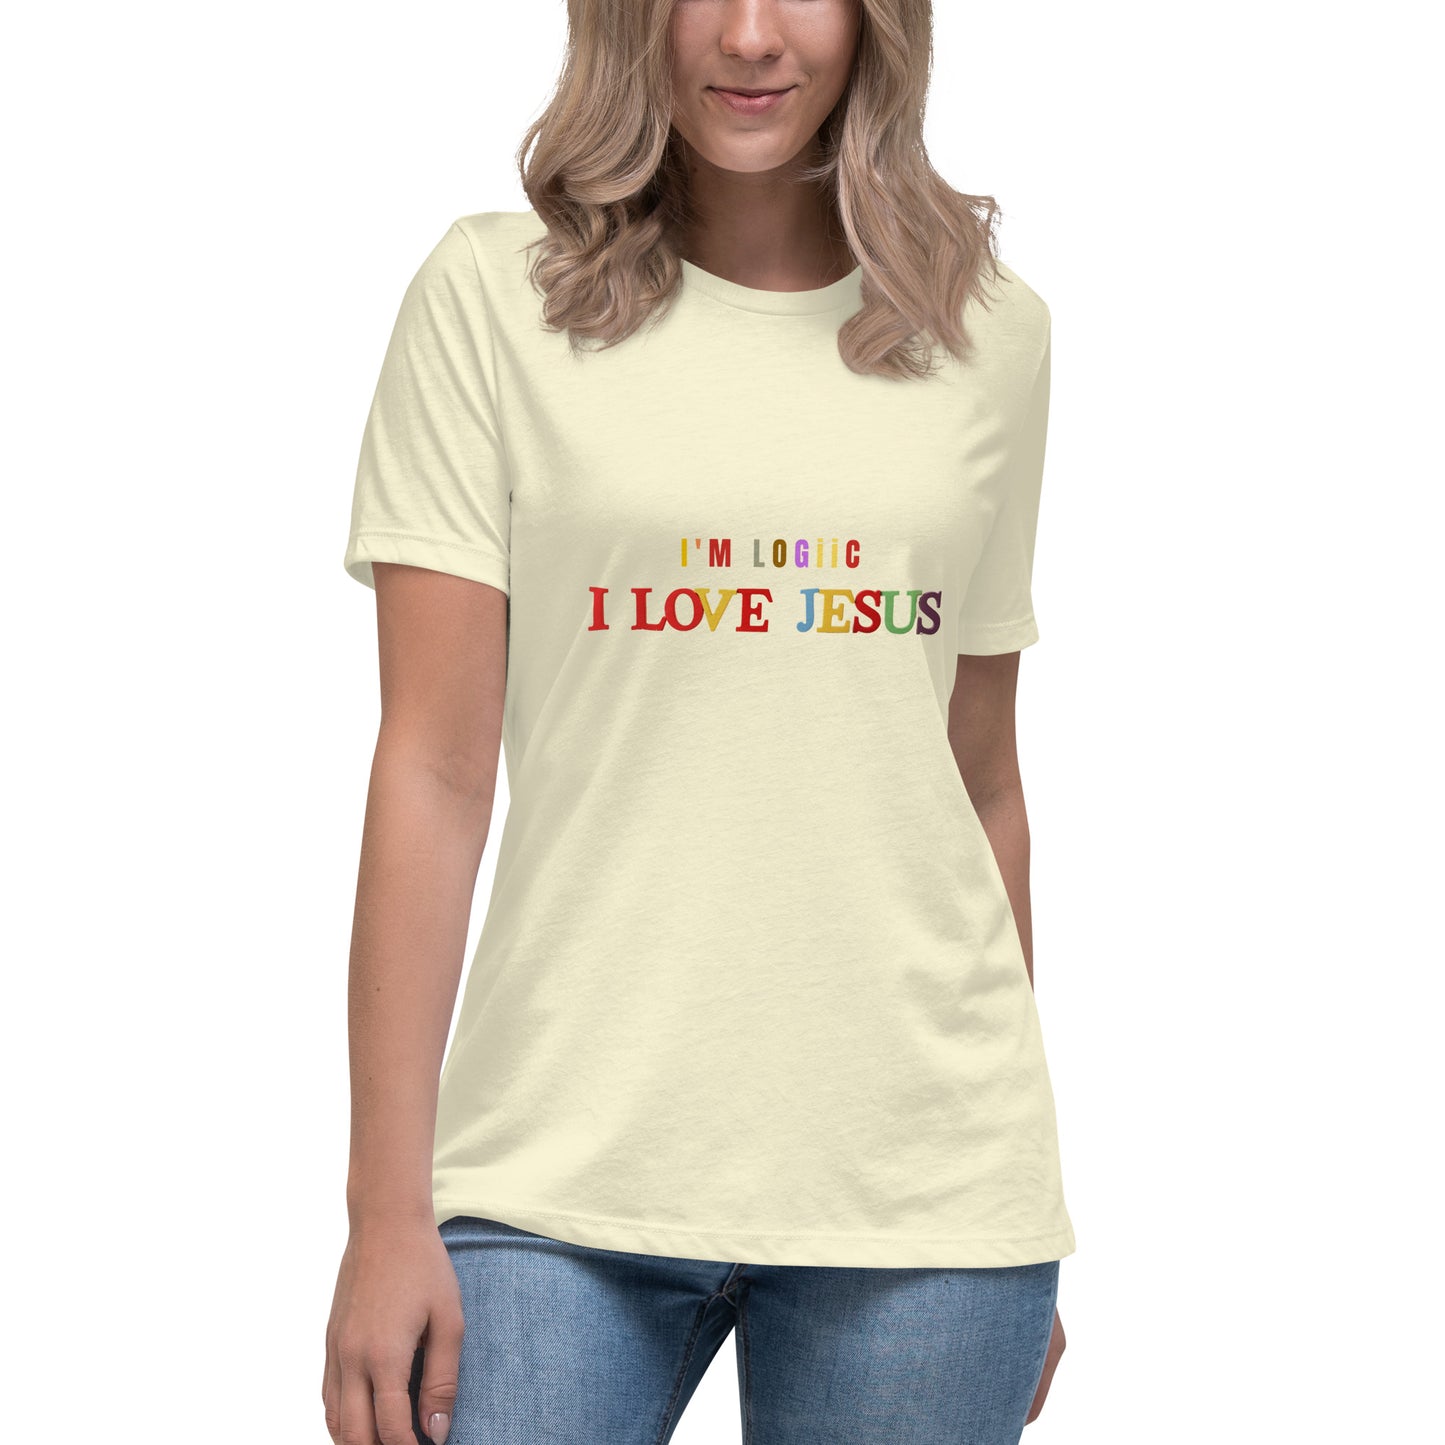 I Love Jesus Women's Relaxed T-Shirt